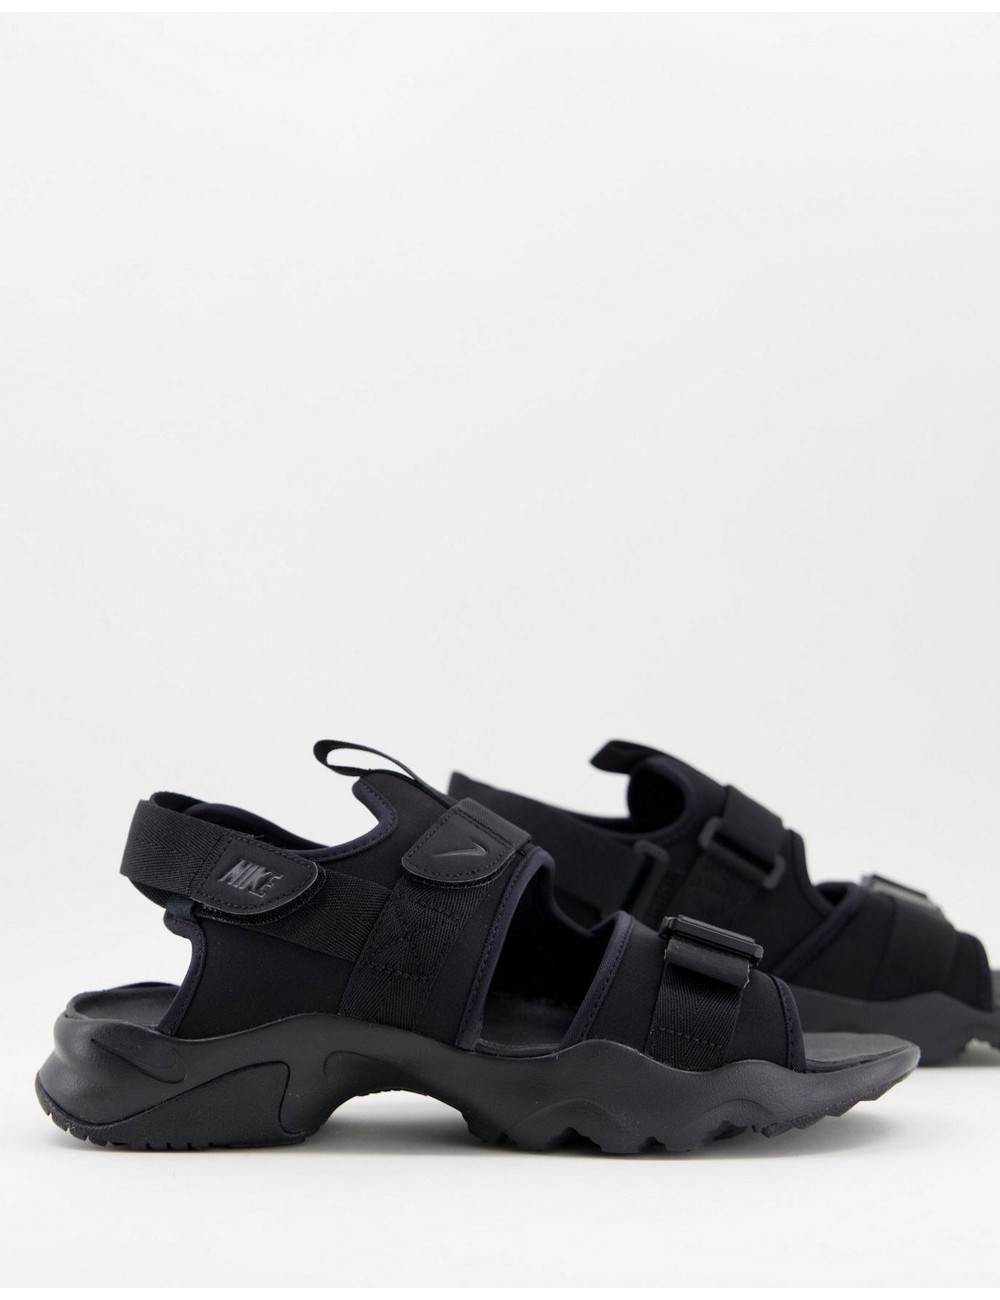 Nike Canyon sandal in black